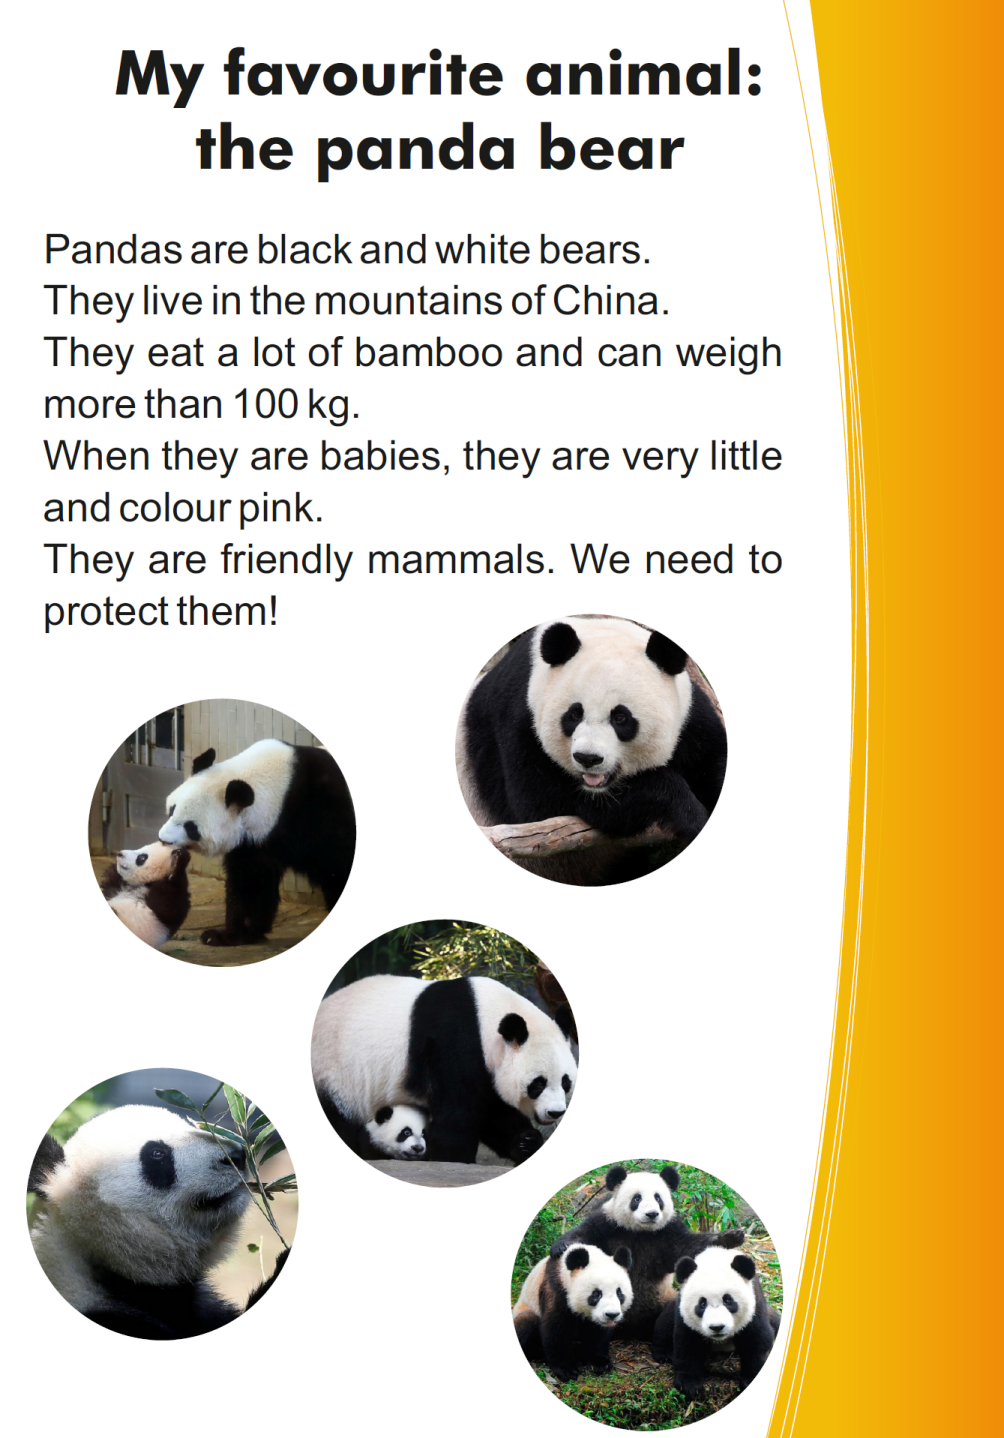 D03 My favourite animal: the panda bear – Proves de comprensió lectora